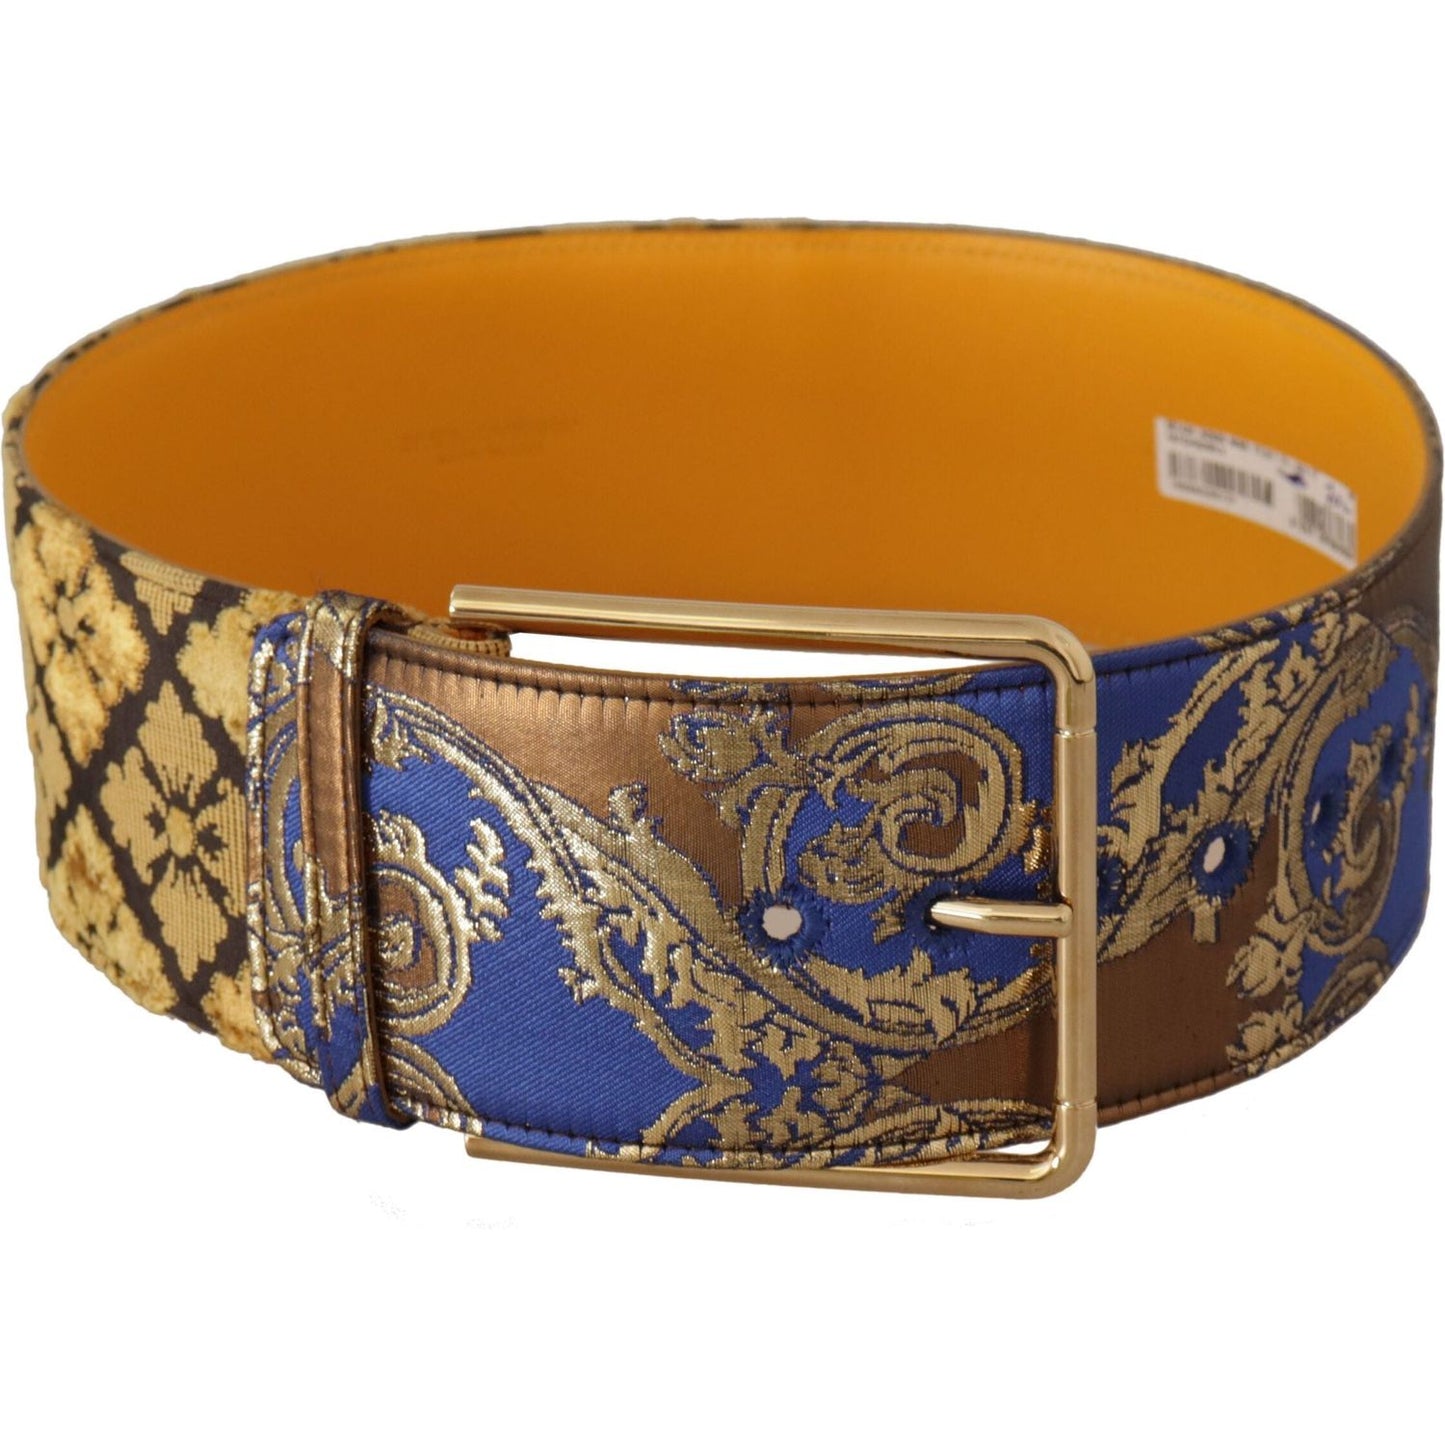 Dolce & Gabbana Elegant Blue Leather Belt with Metal Buckle blue-floral-patchwork-leather-wide-waist-buckle-belt